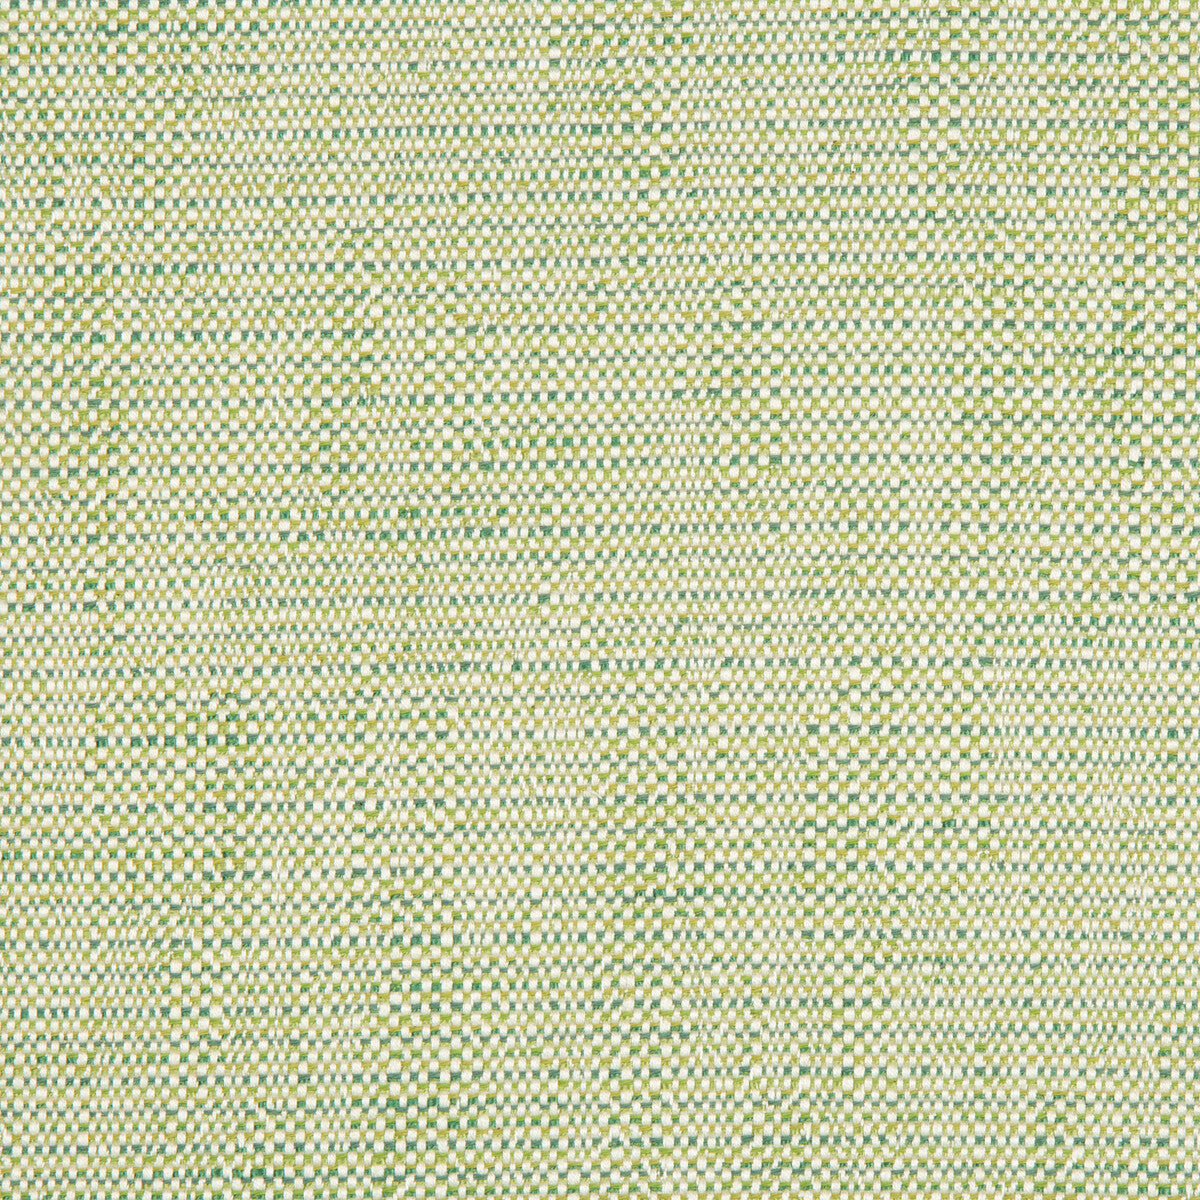 Kravet Design fabric in 34774-3 color - pattern 34774.3.0 - by Kravet Design in the Gis collection